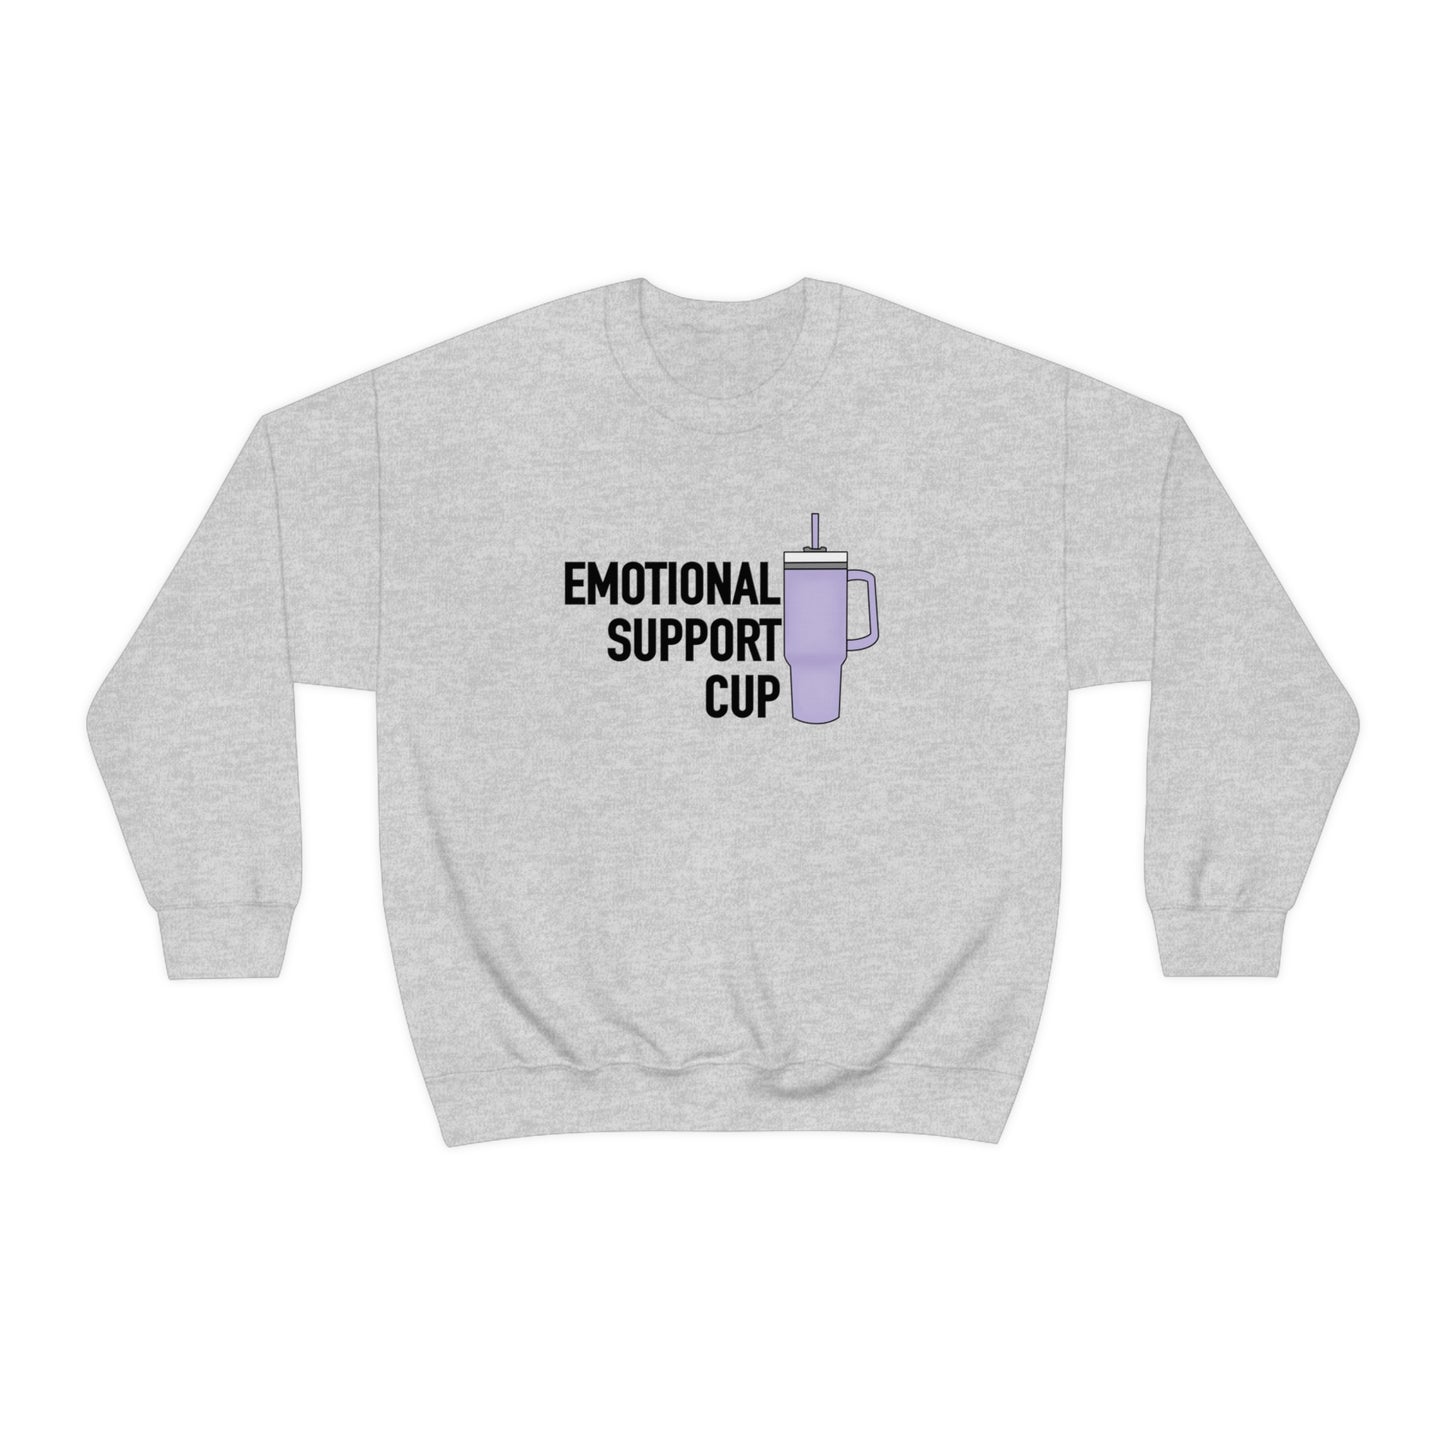 "Emotional Support Cup" Gildan Unisex Crewneck Sweatshirt